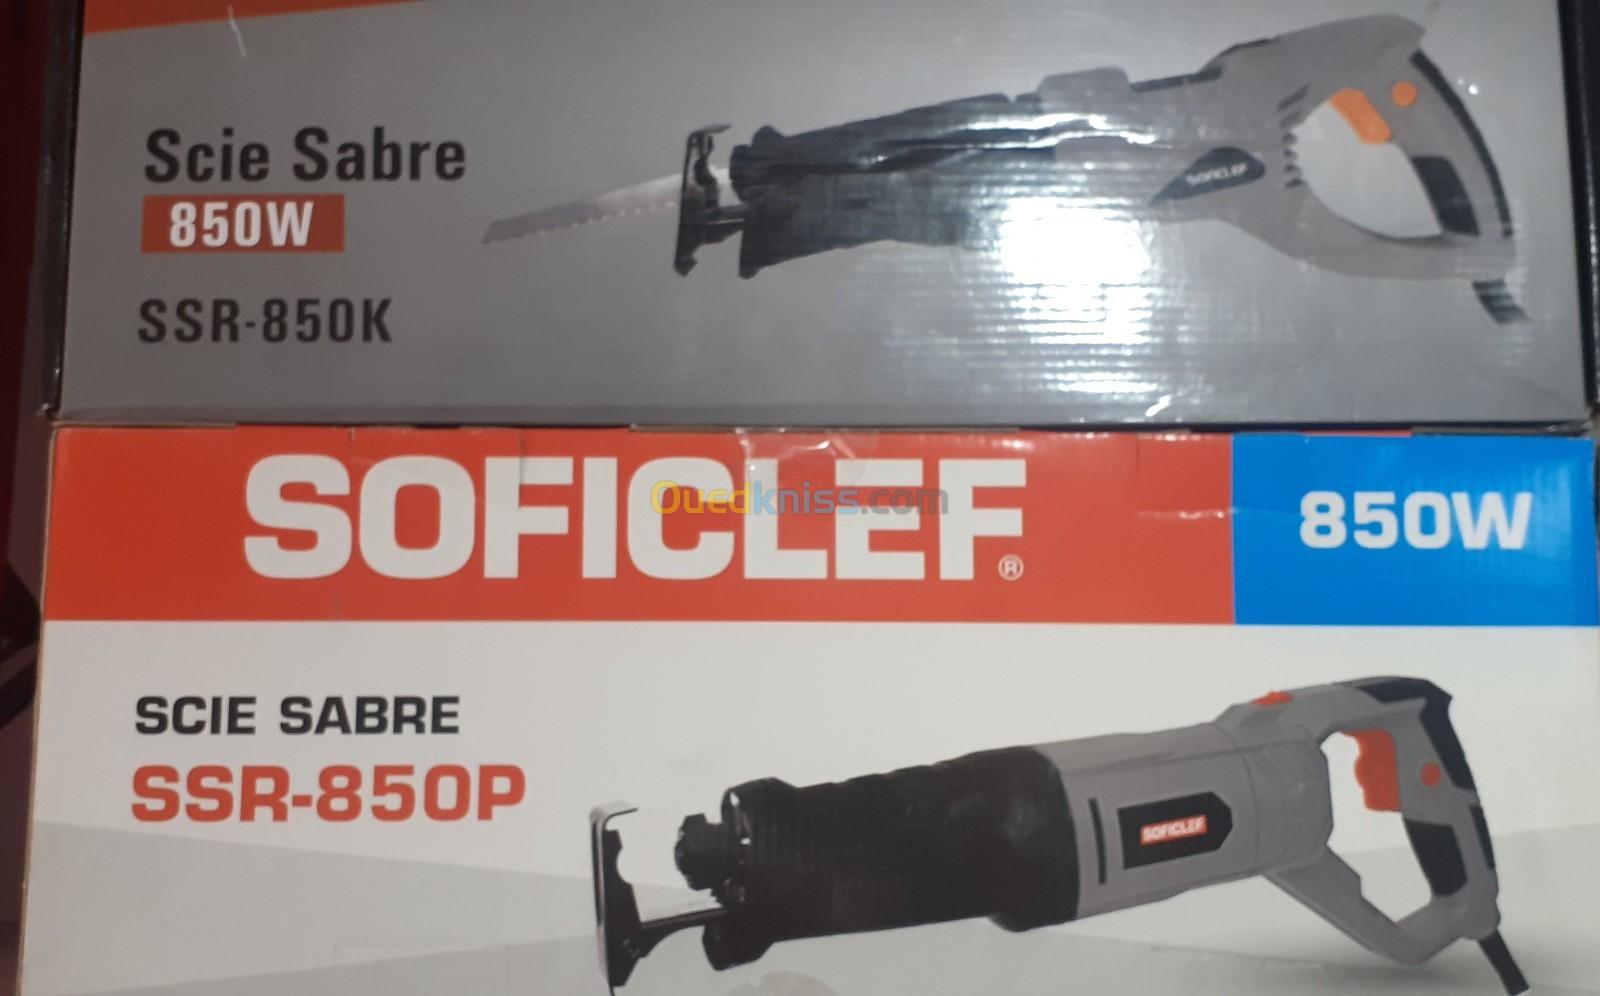 Scie Sabre 850W SOFICLEF – SOFICLEF